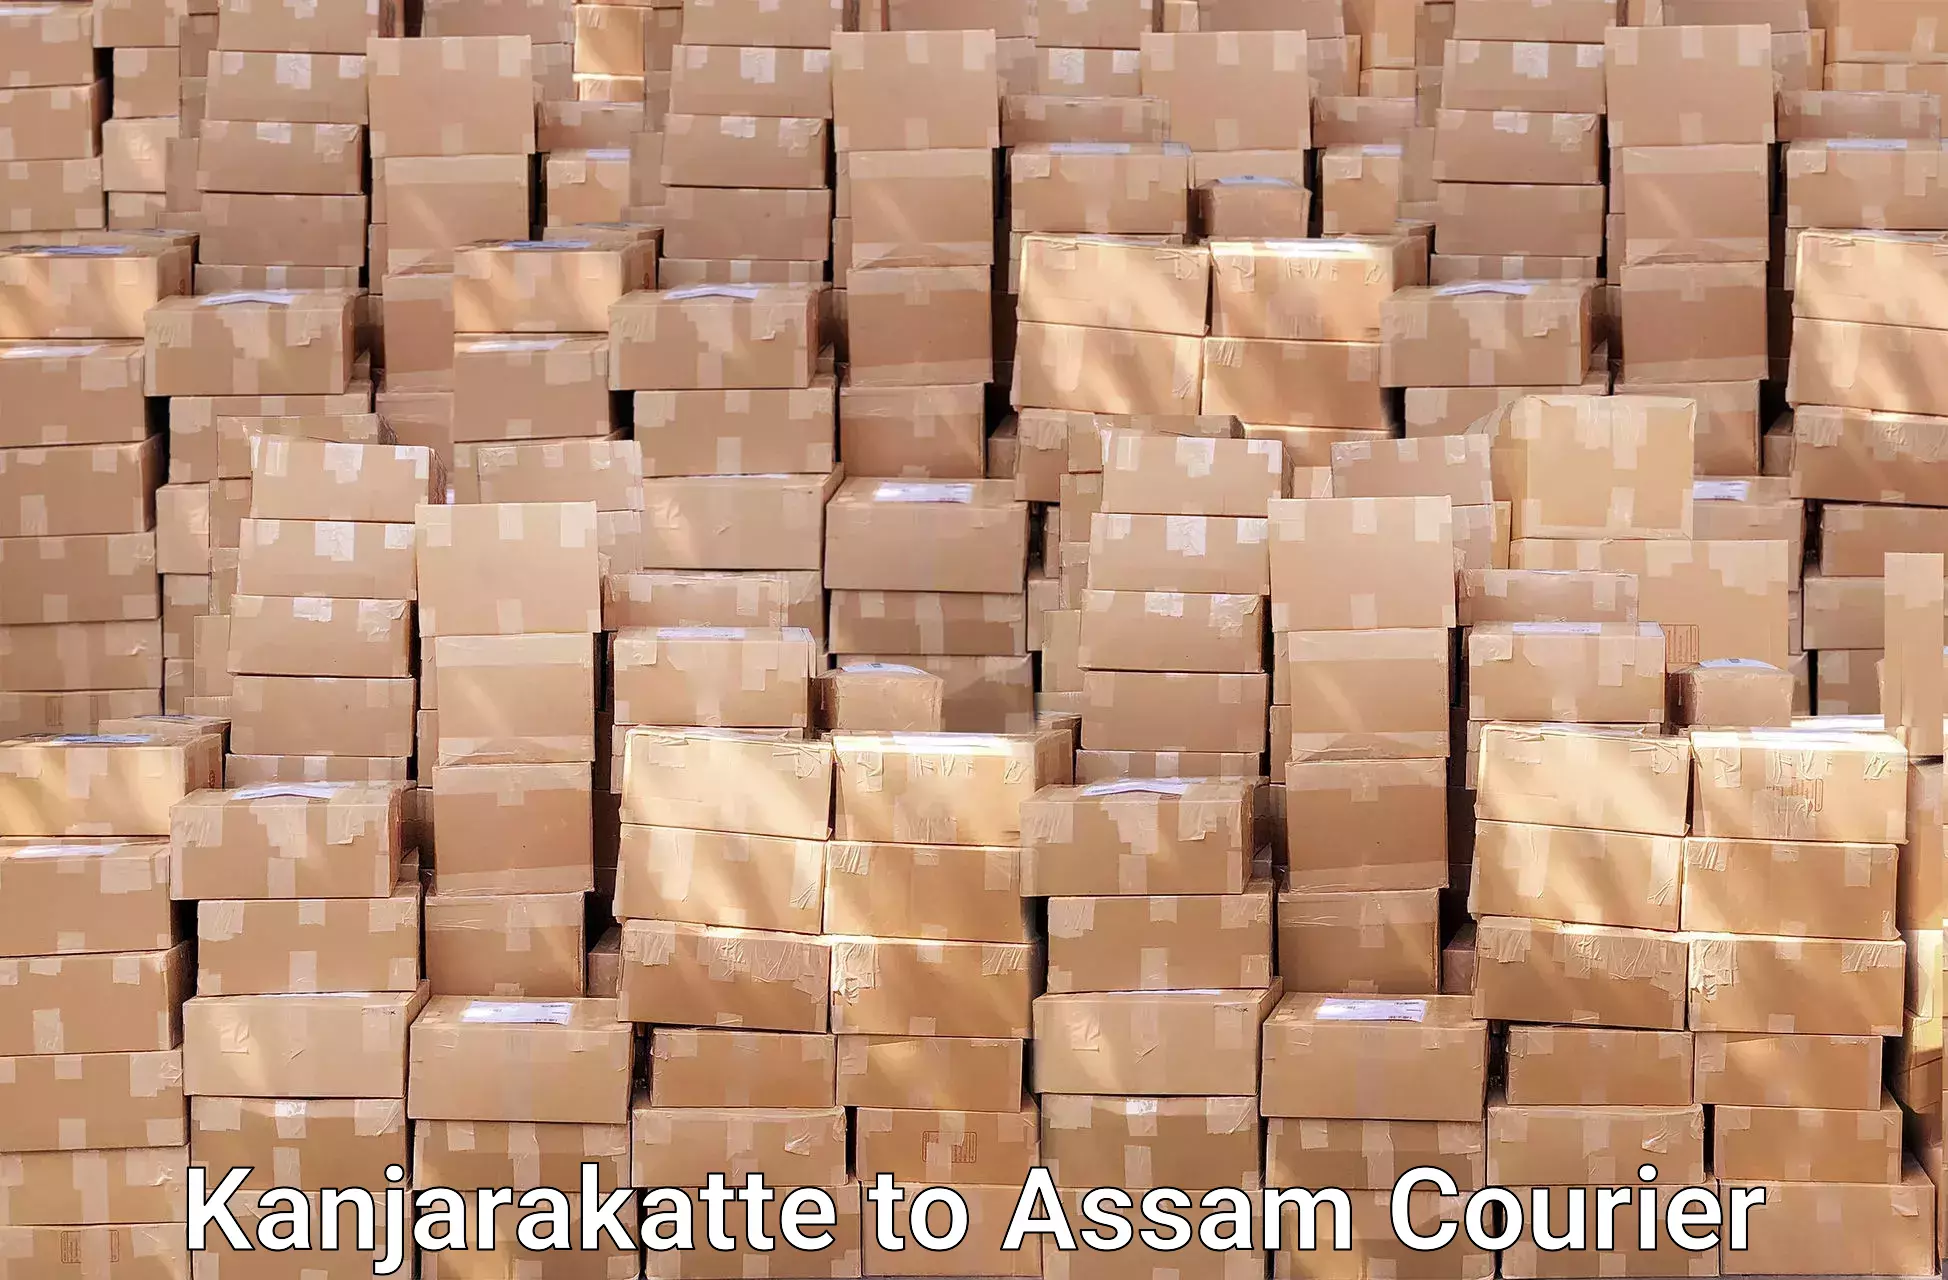 Quality moving company in Kanjarakatte to Lala Assam